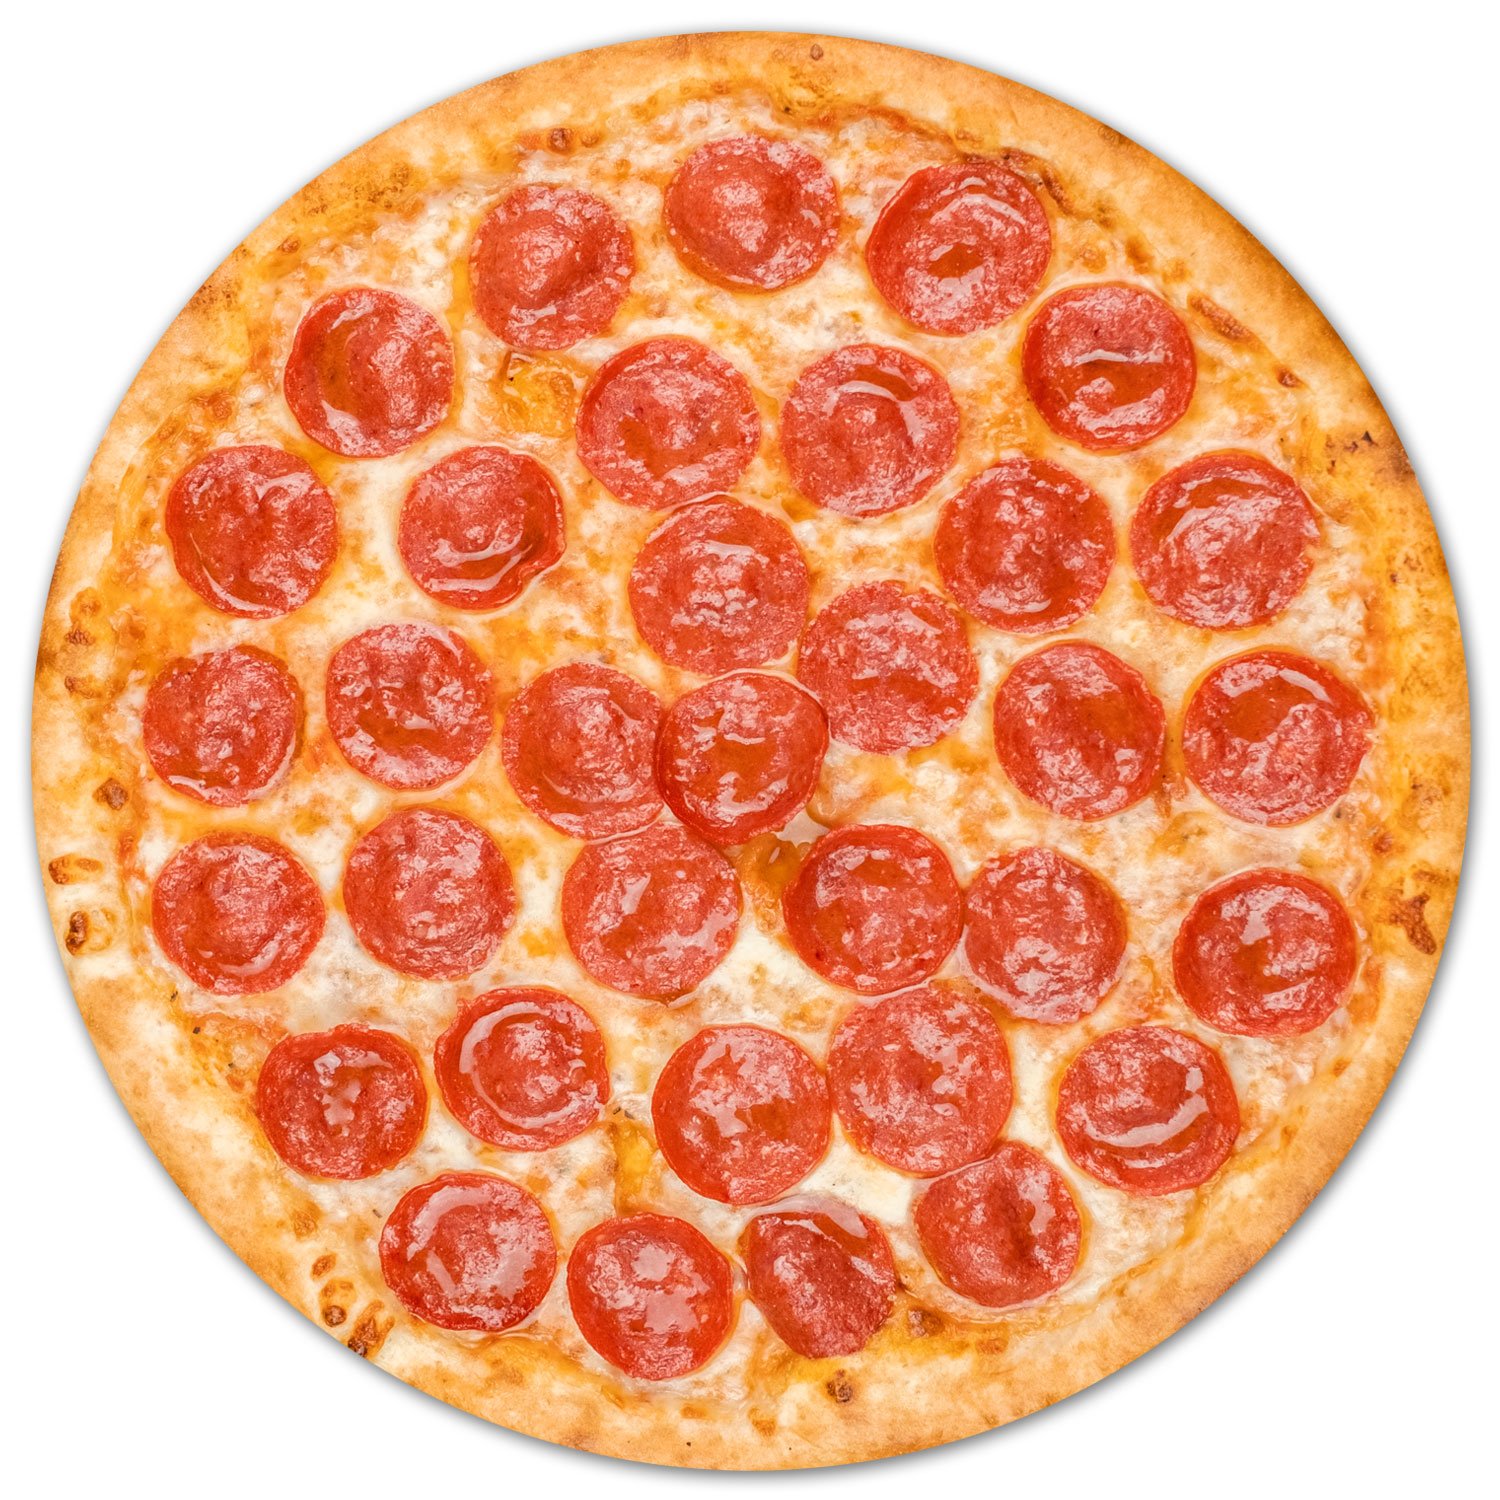 фото пепперони пицца на белом фоне фото 8